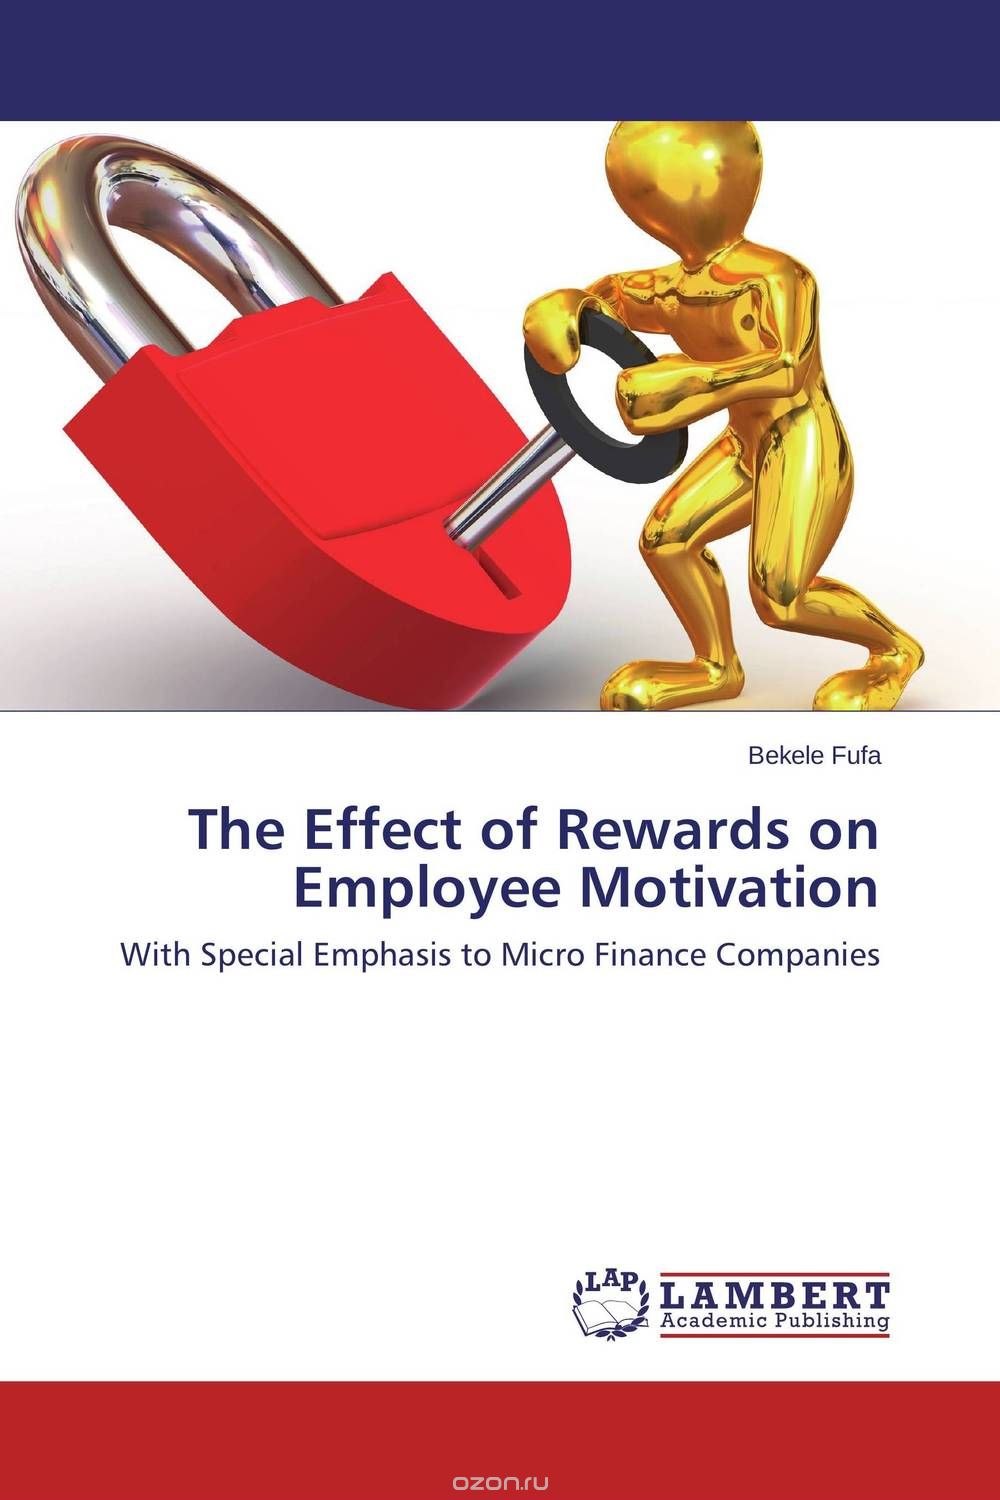 Скачать книгу "The Effect of Rewards on Employee Motivation"